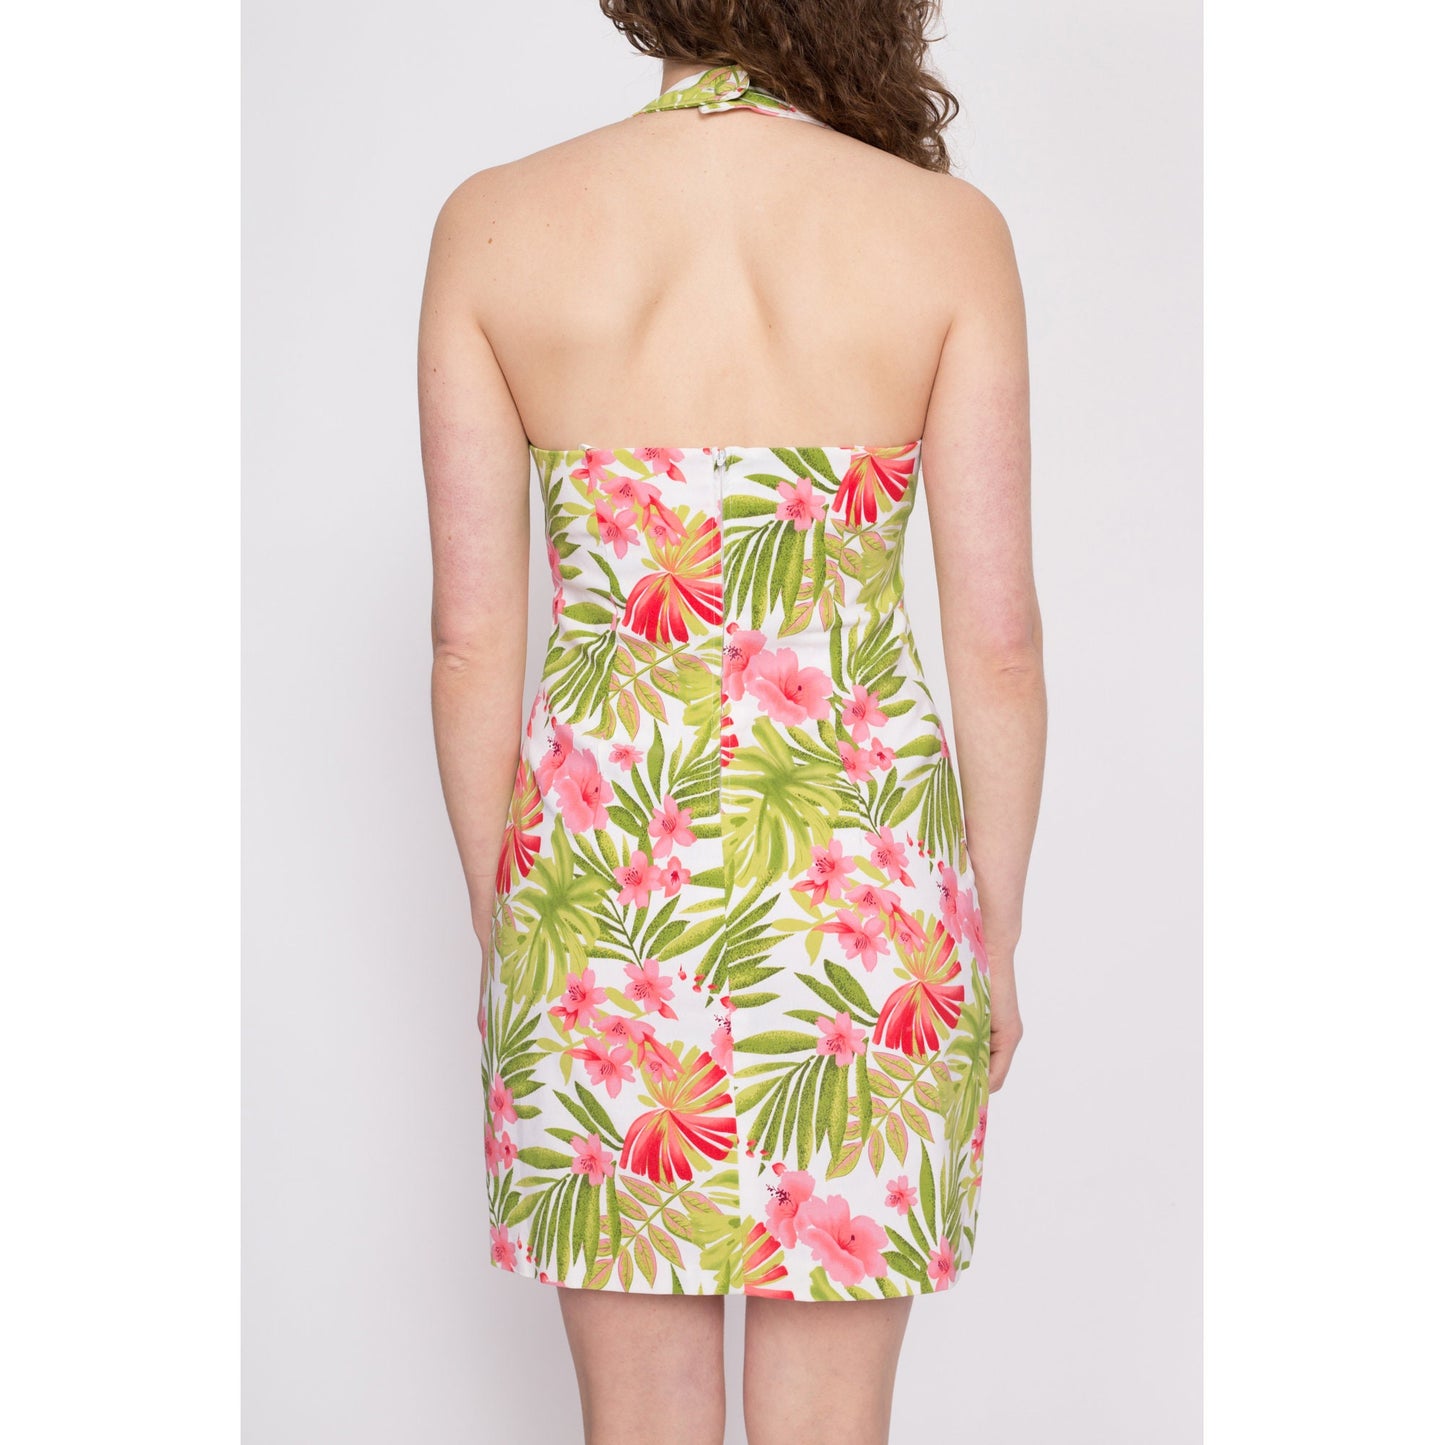 Y2K Tropical Floral Halter Mini Dress - Medium | Vintage White Green Pink Low Back Party Dress